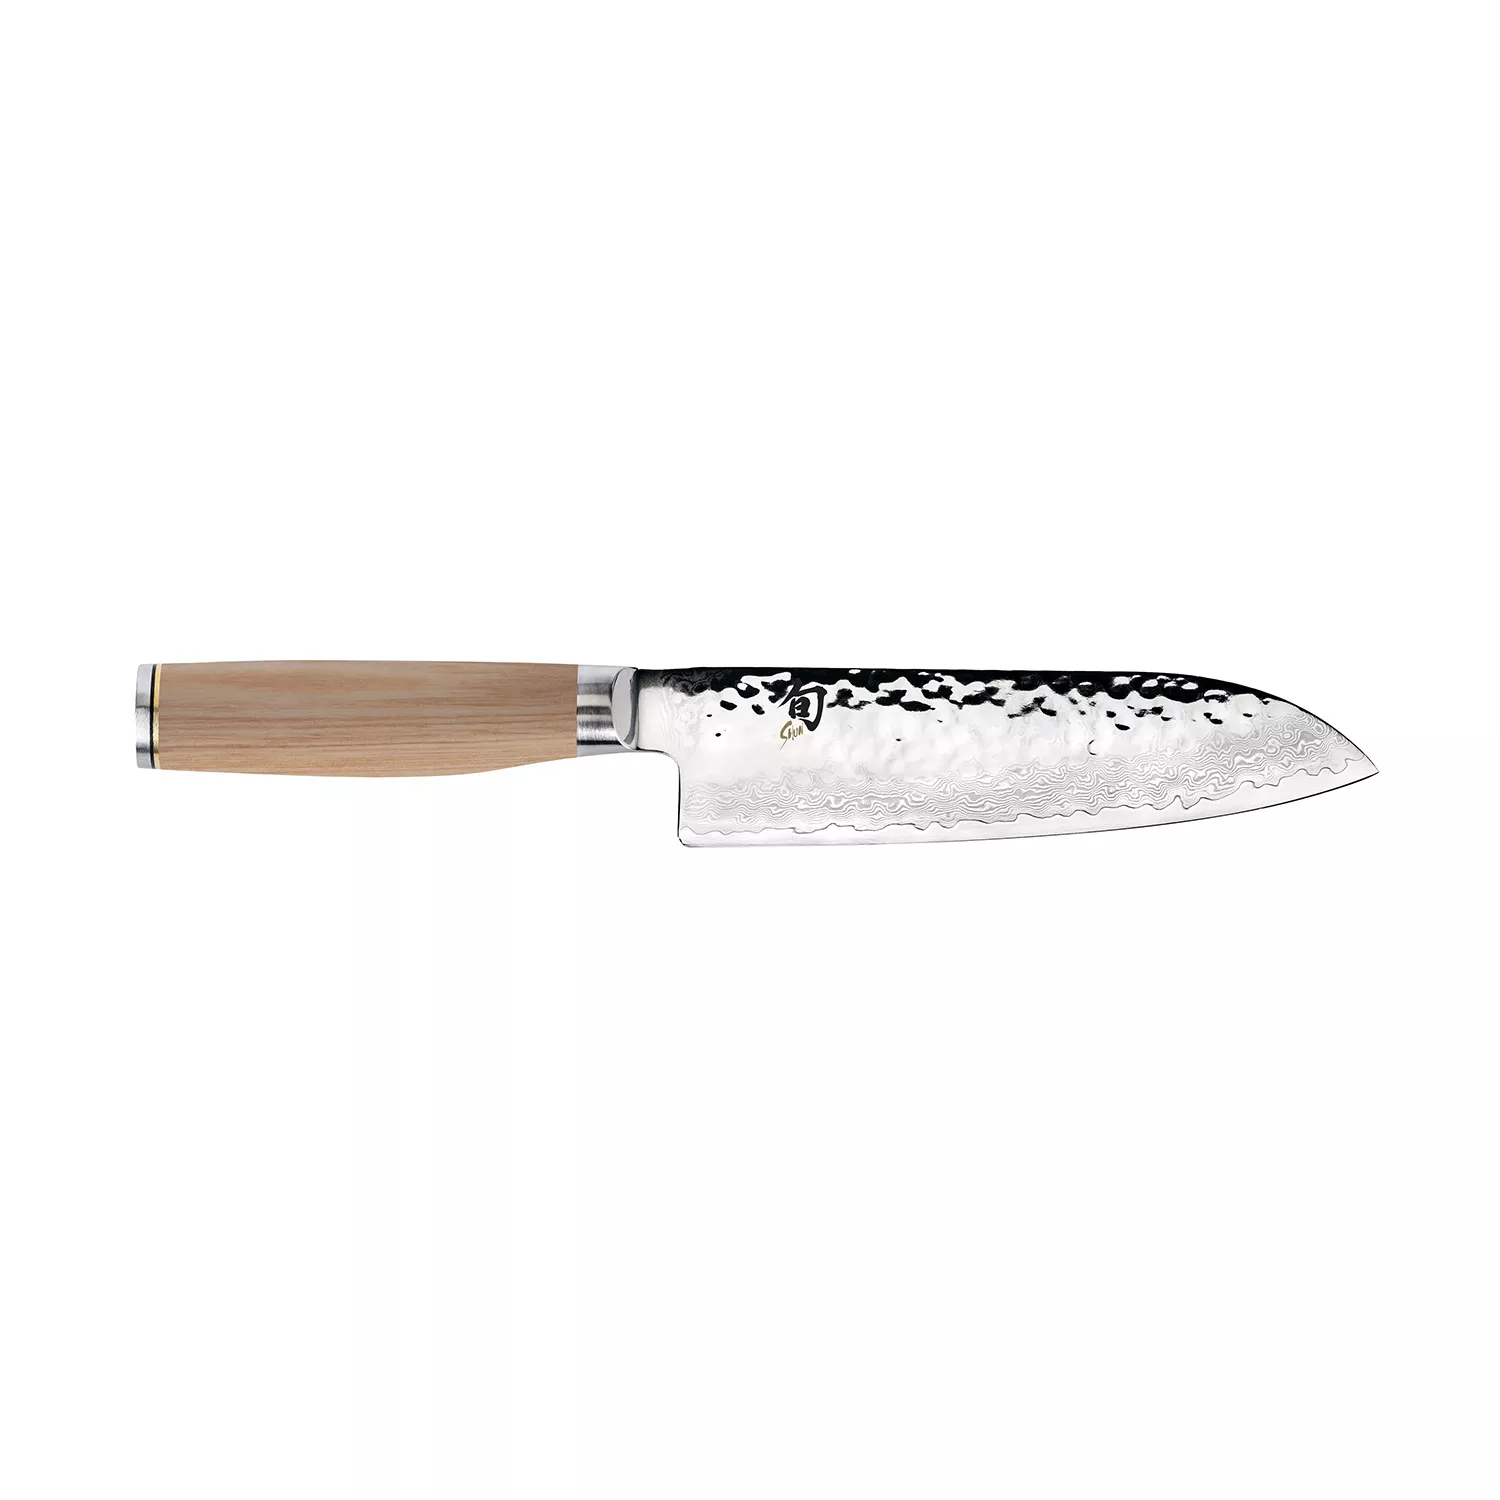 Viking Professional 7 Santoku Knife